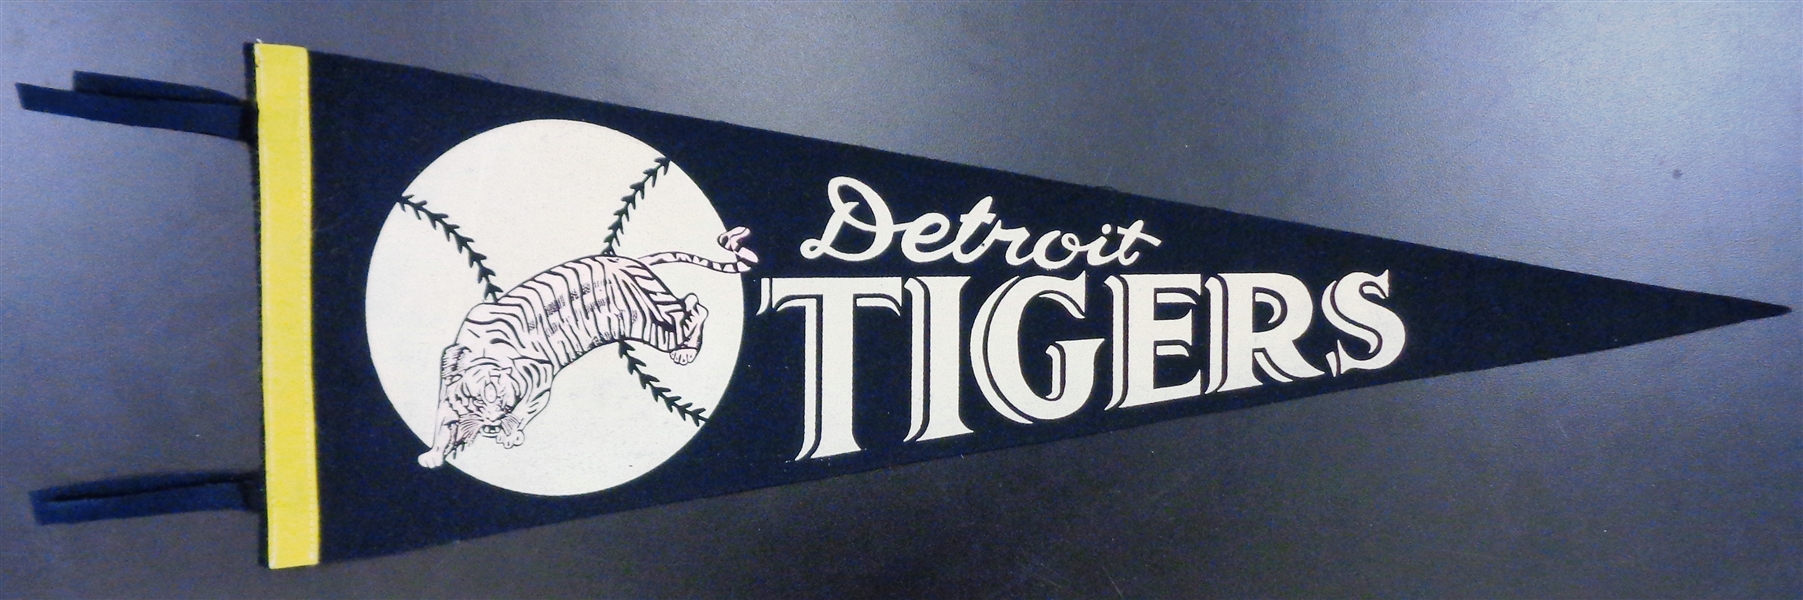 Detroit Tigers 1950s Blue Pennant